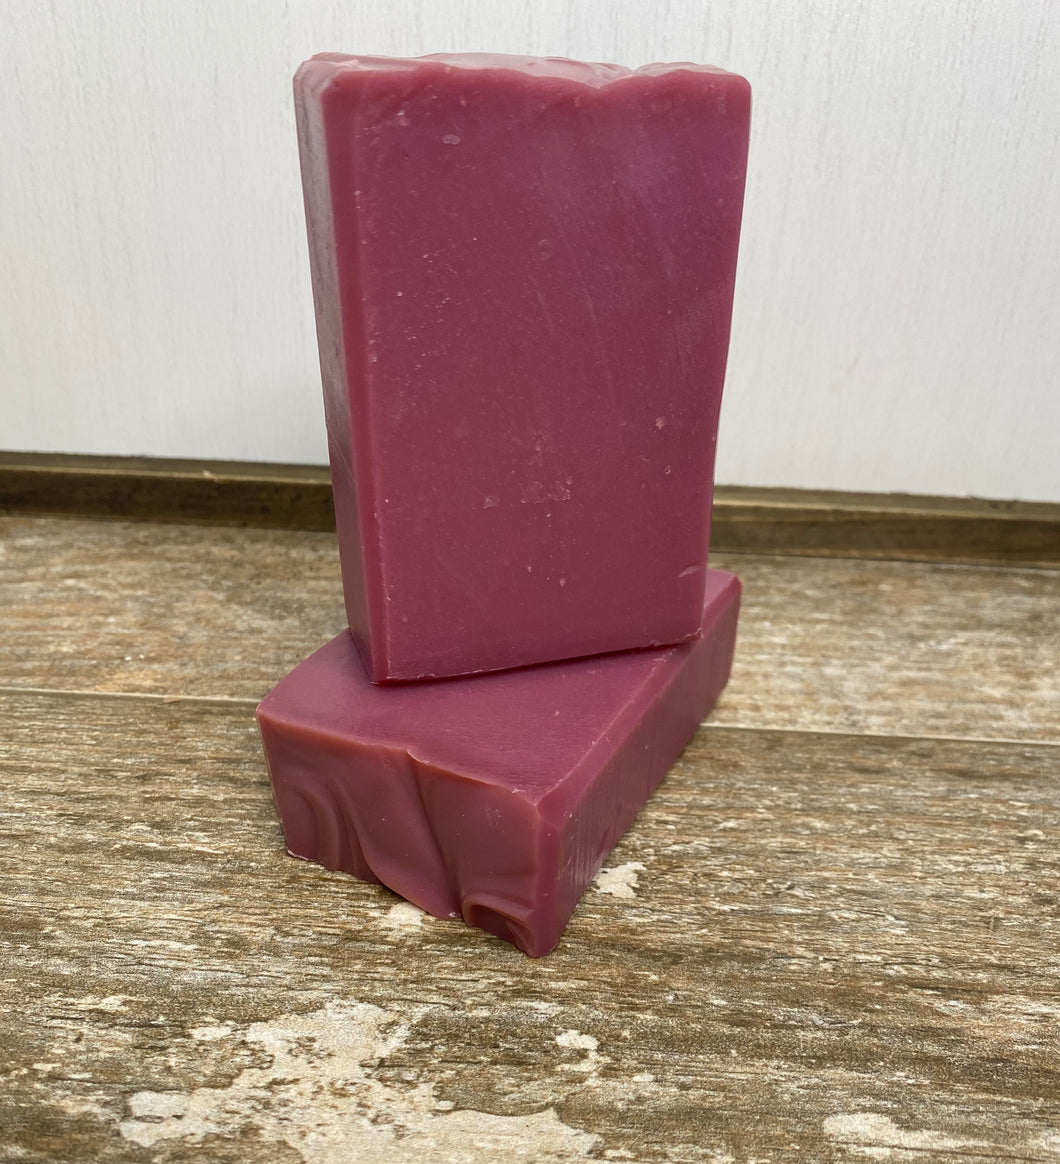 Redbud - Prairie Wind Soap